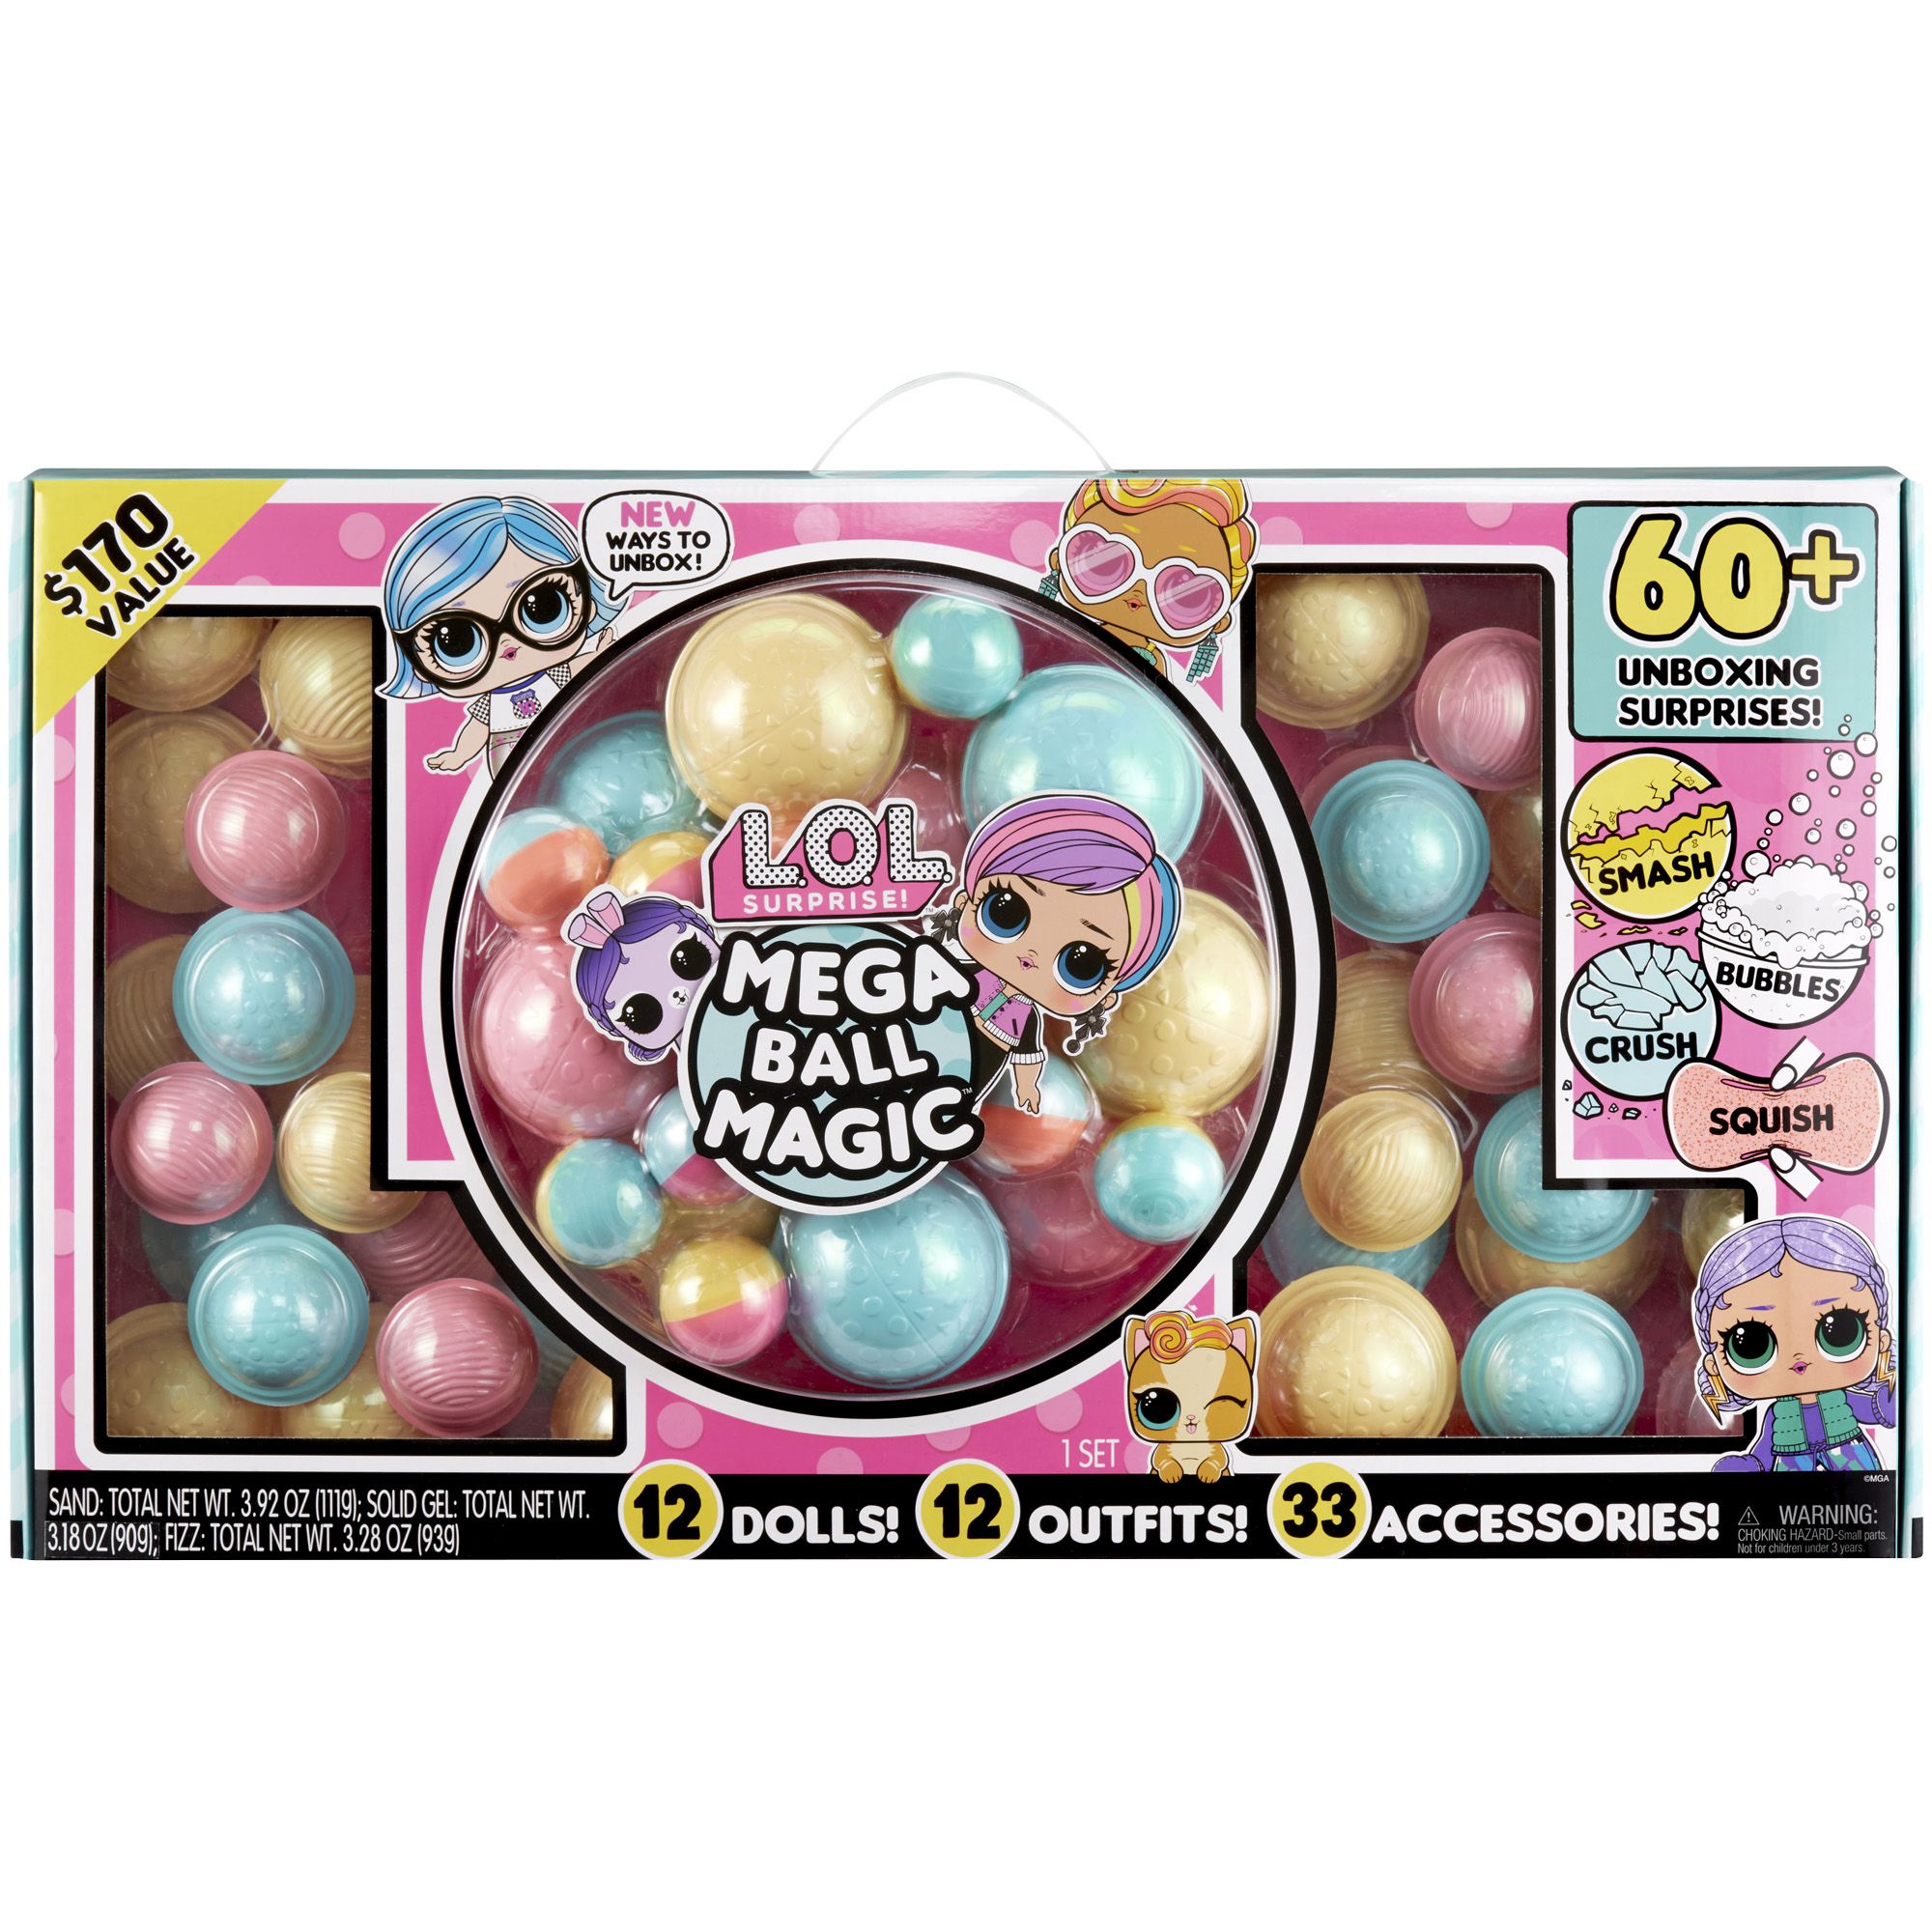 LOL Surprise Mega Ball Magic Just $95 Shipped ($170 Value) w/ Our Code, Unbox 60 Surprises